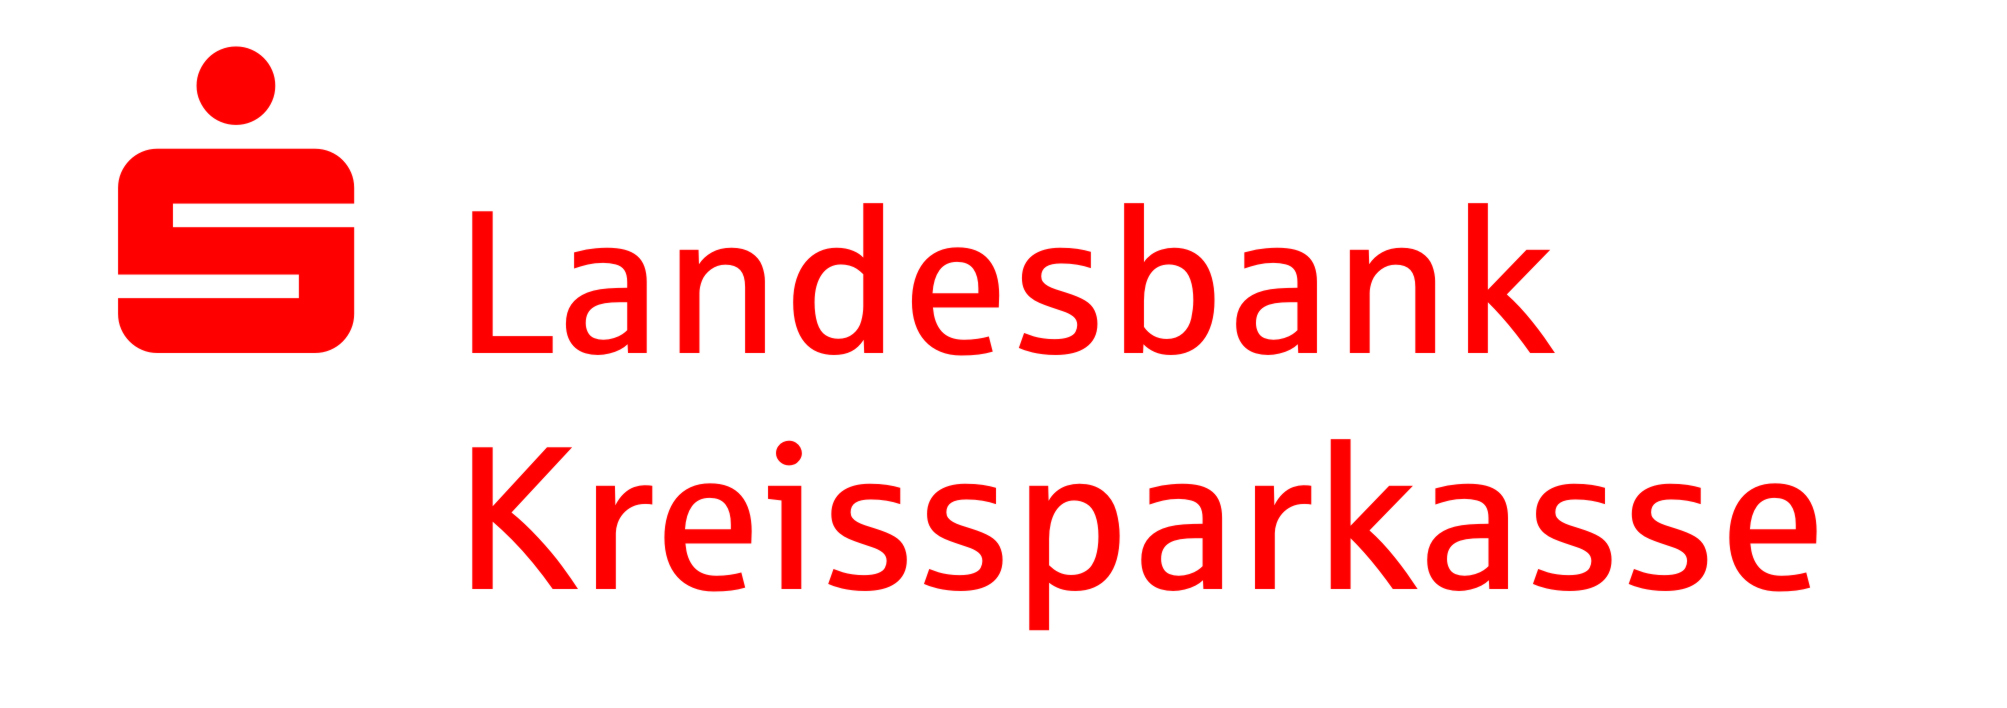 96-landesbank-kreissparkasse-logo.jpg